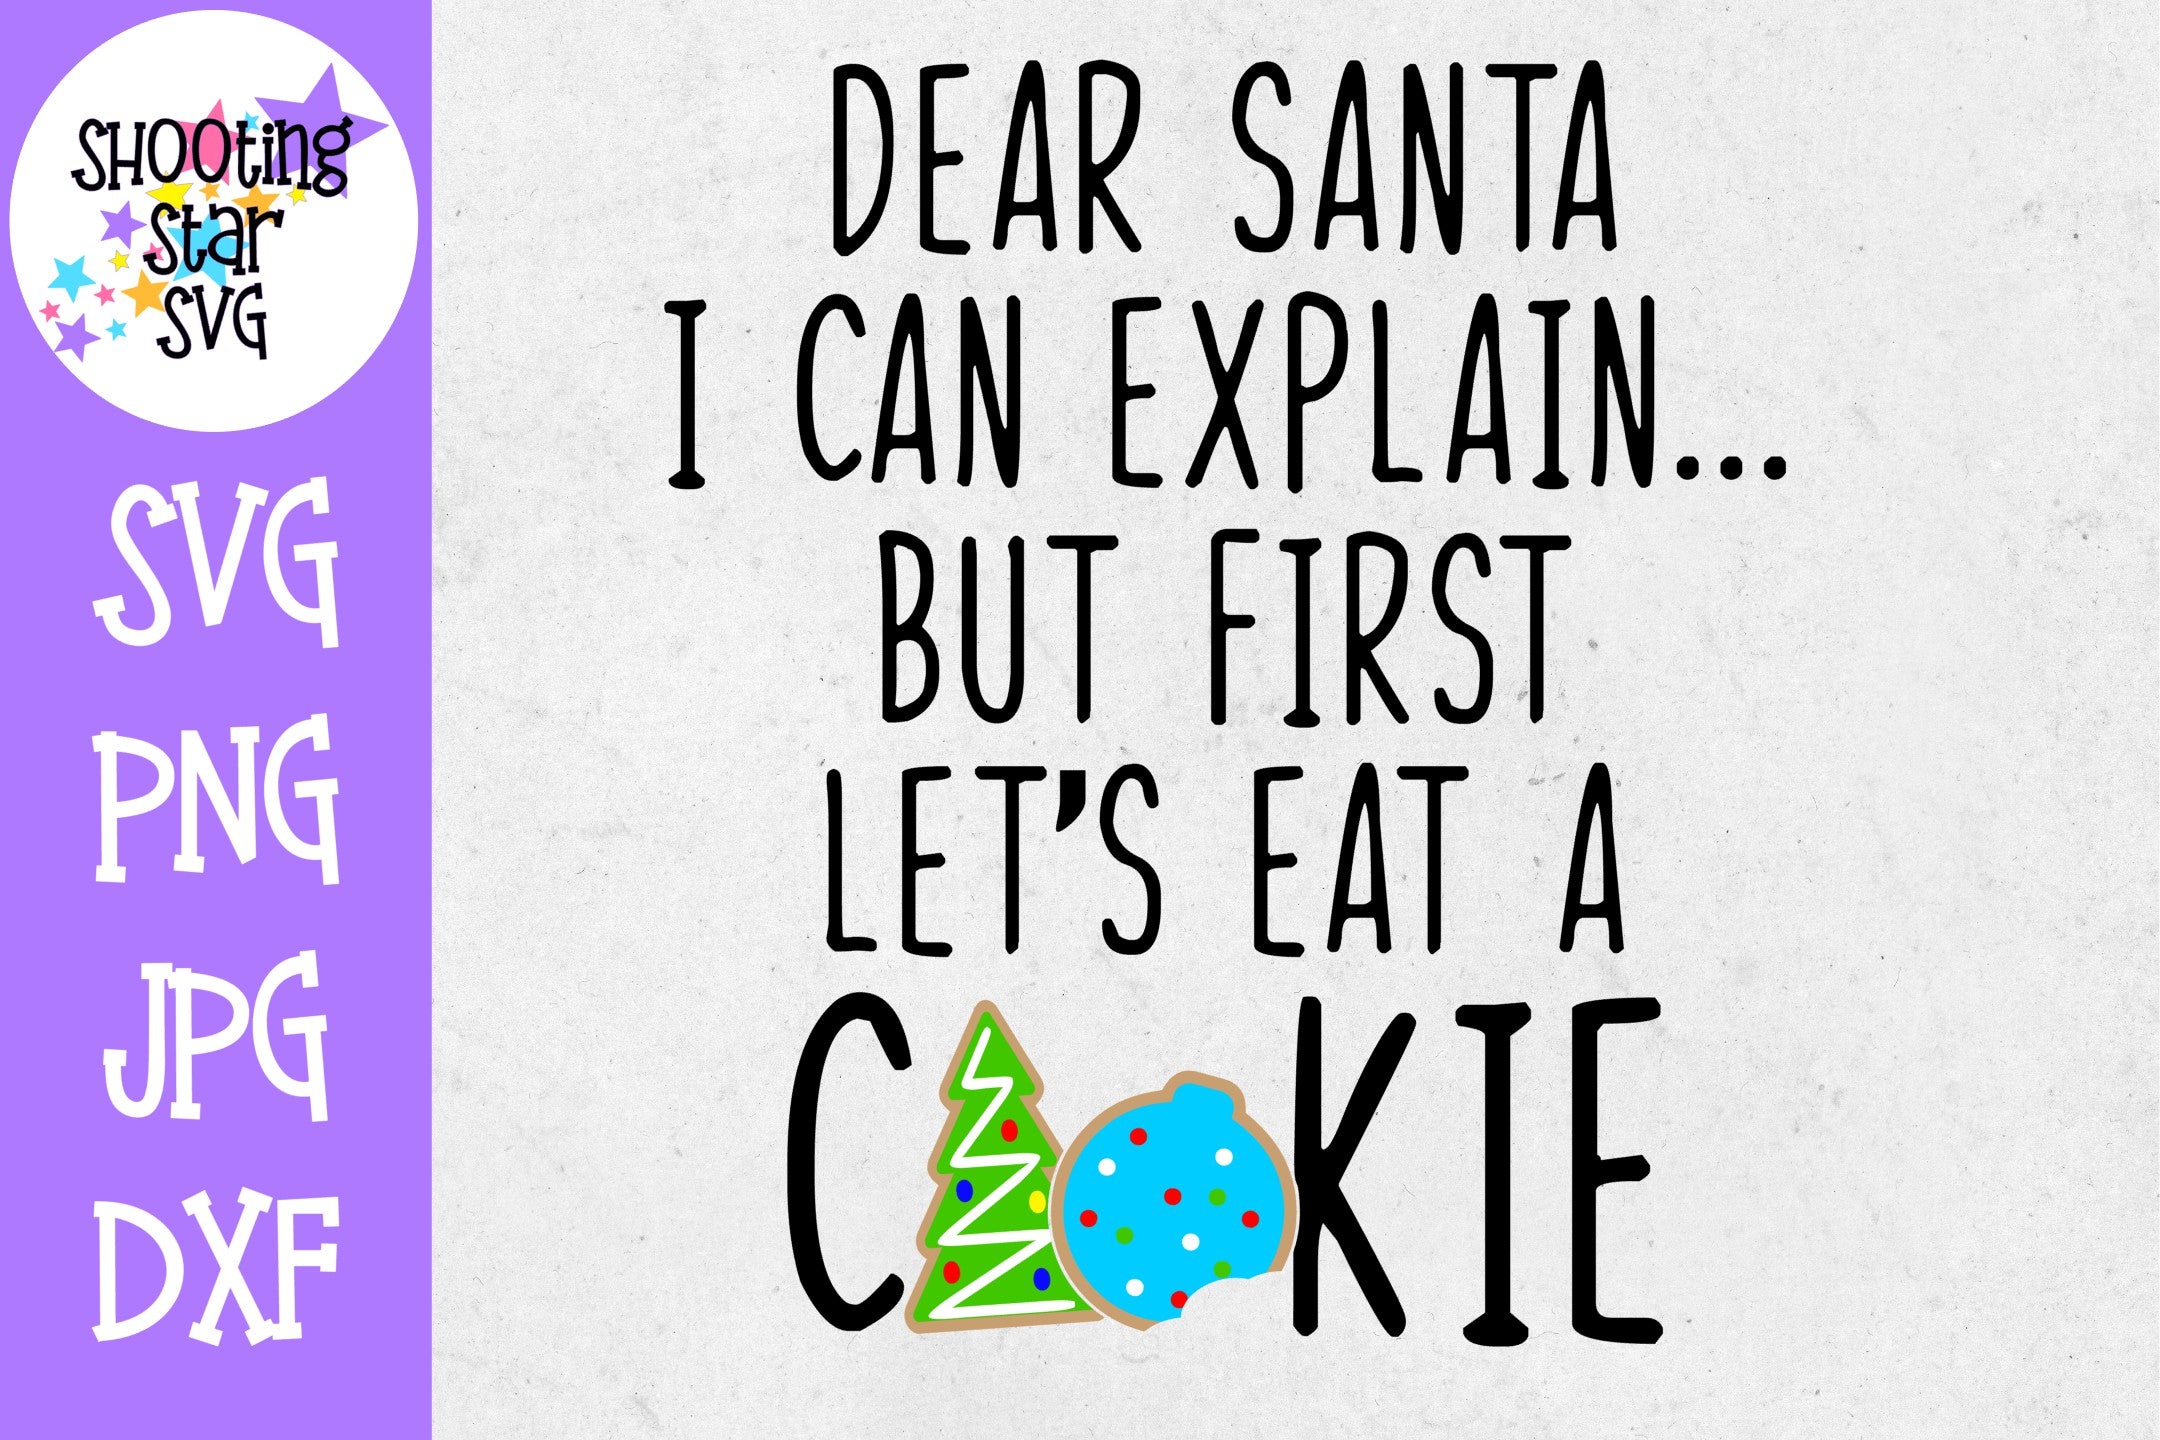 Dear Santa I Can Explain Let't Eat a Cookie - Christmas SVG